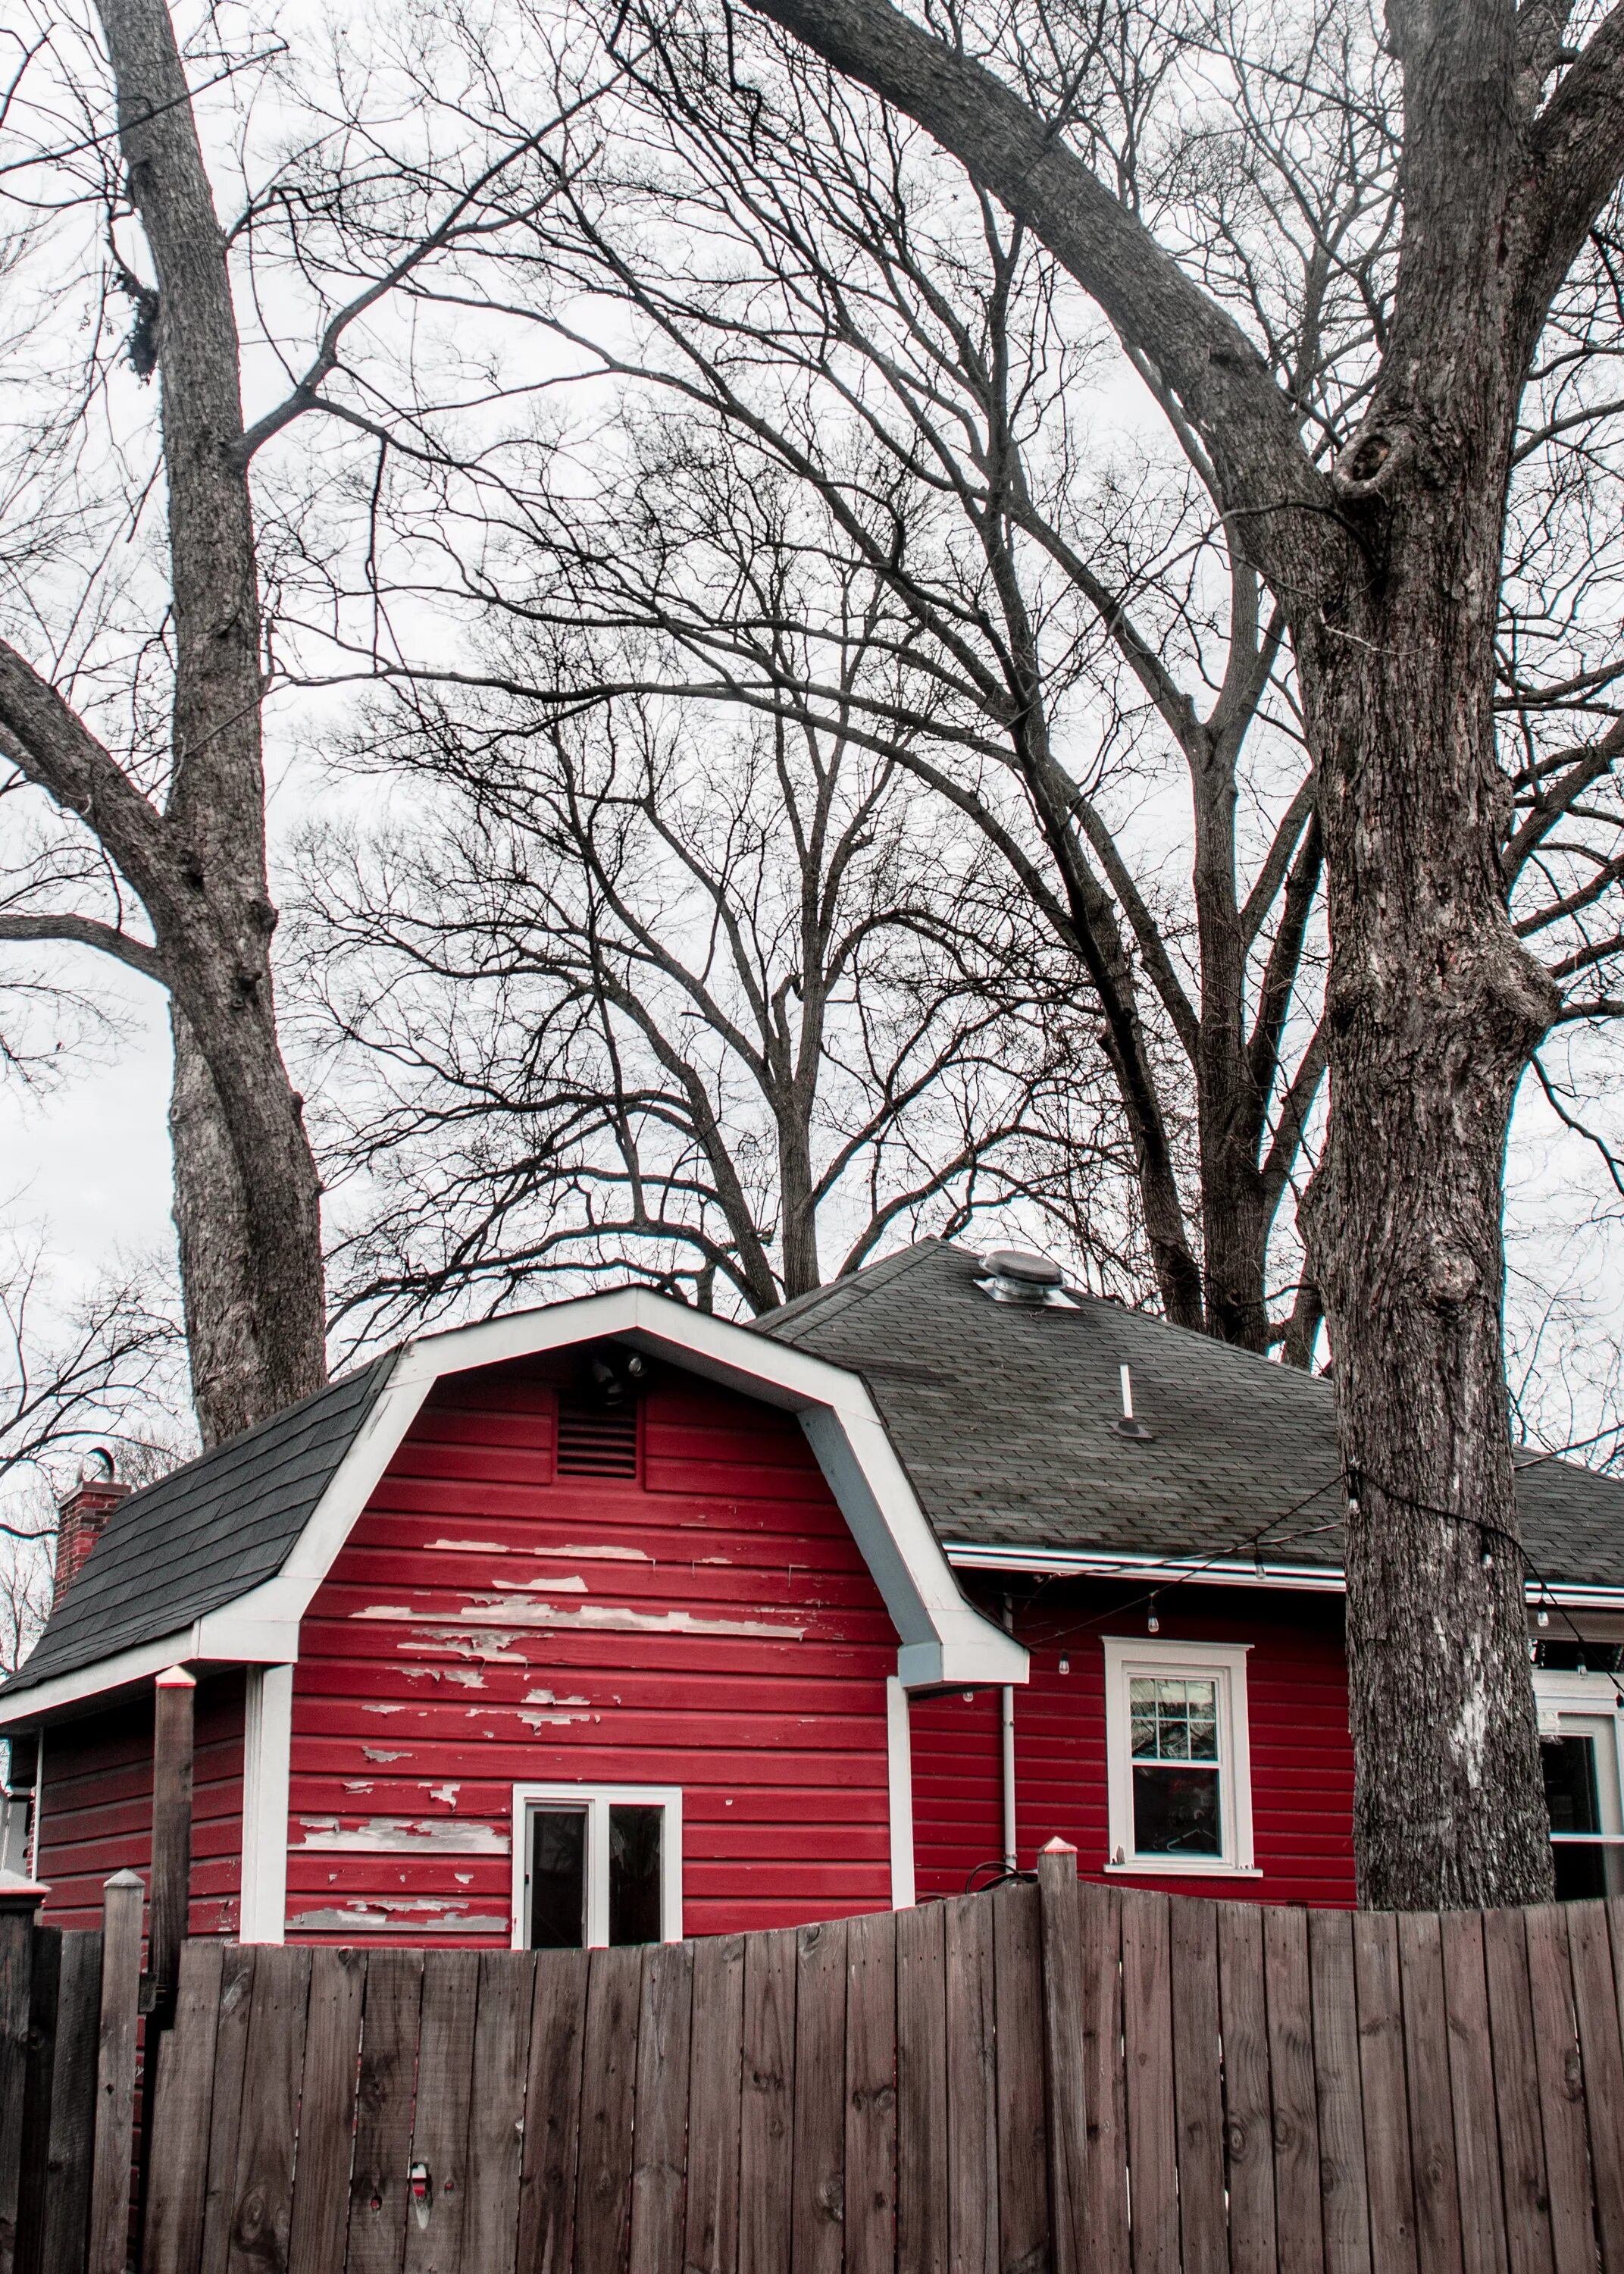 Домики красного цвета. Красный дом. Красный домик. Красный дачный домик. Красный деревянный дом.